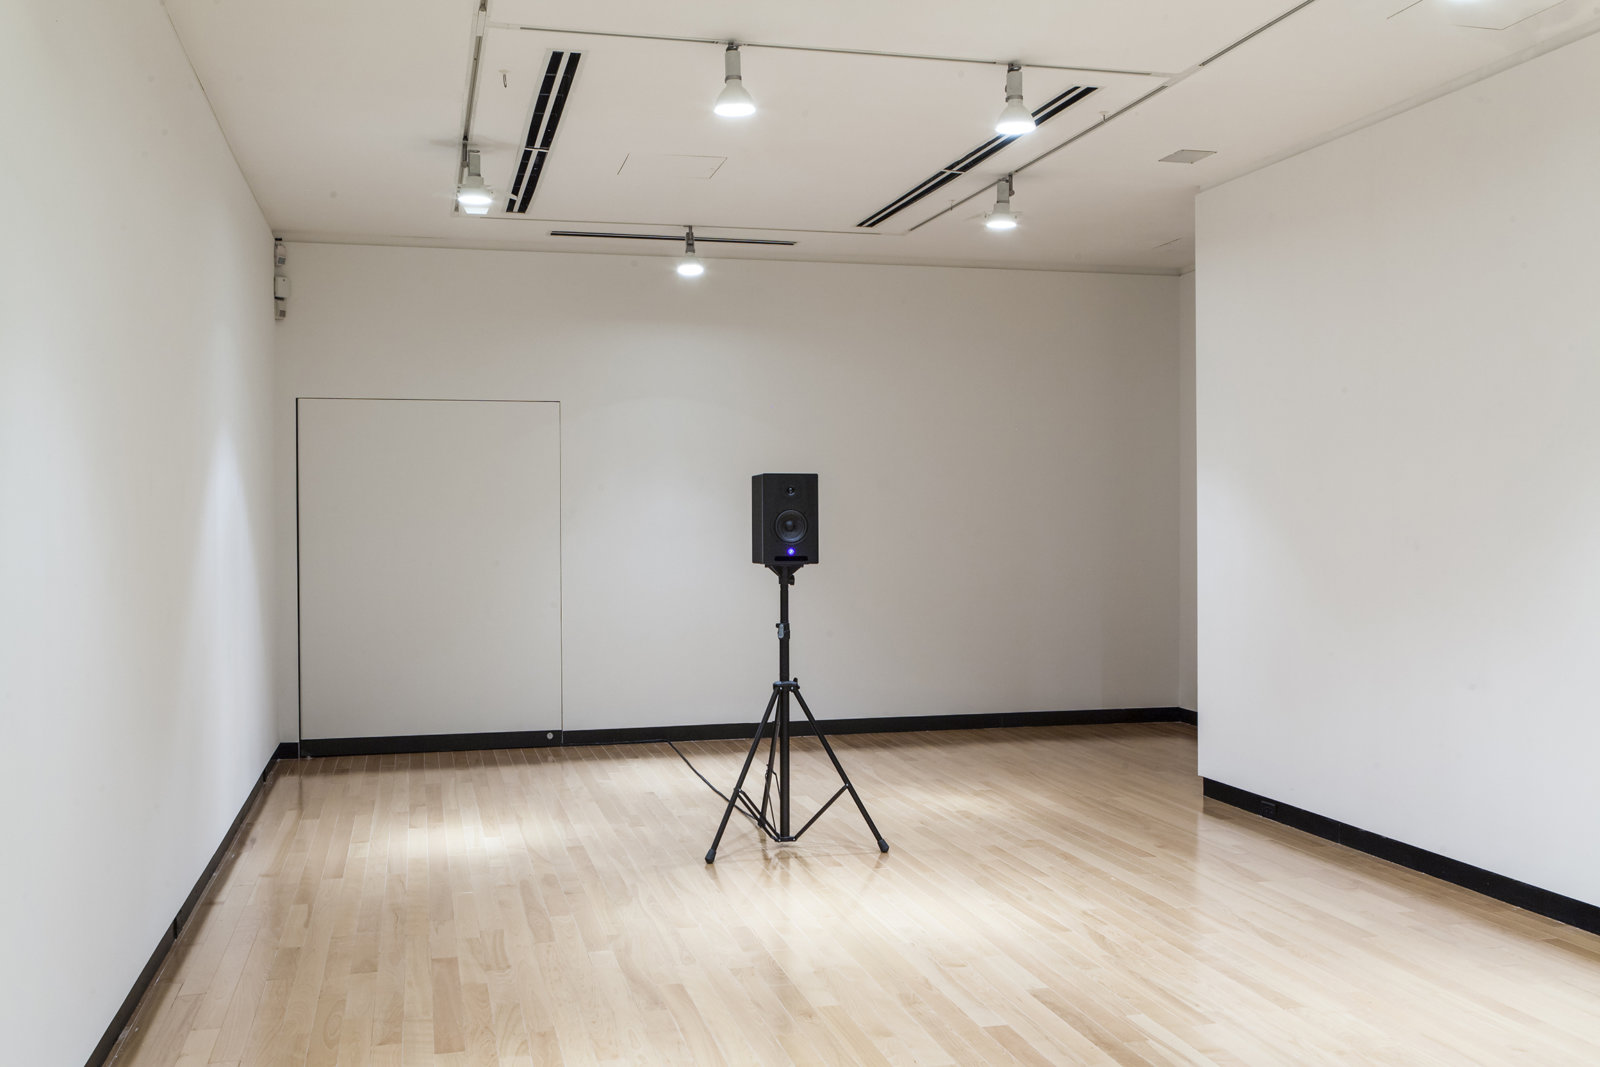 Janice Kerbel, Ballgame (Pregame), 2009, audio recording, loudspeaker, stand, dimensions variable. Installation view, Pre, Justina M. Barnicke Gallery, Toronto, ON, 2012